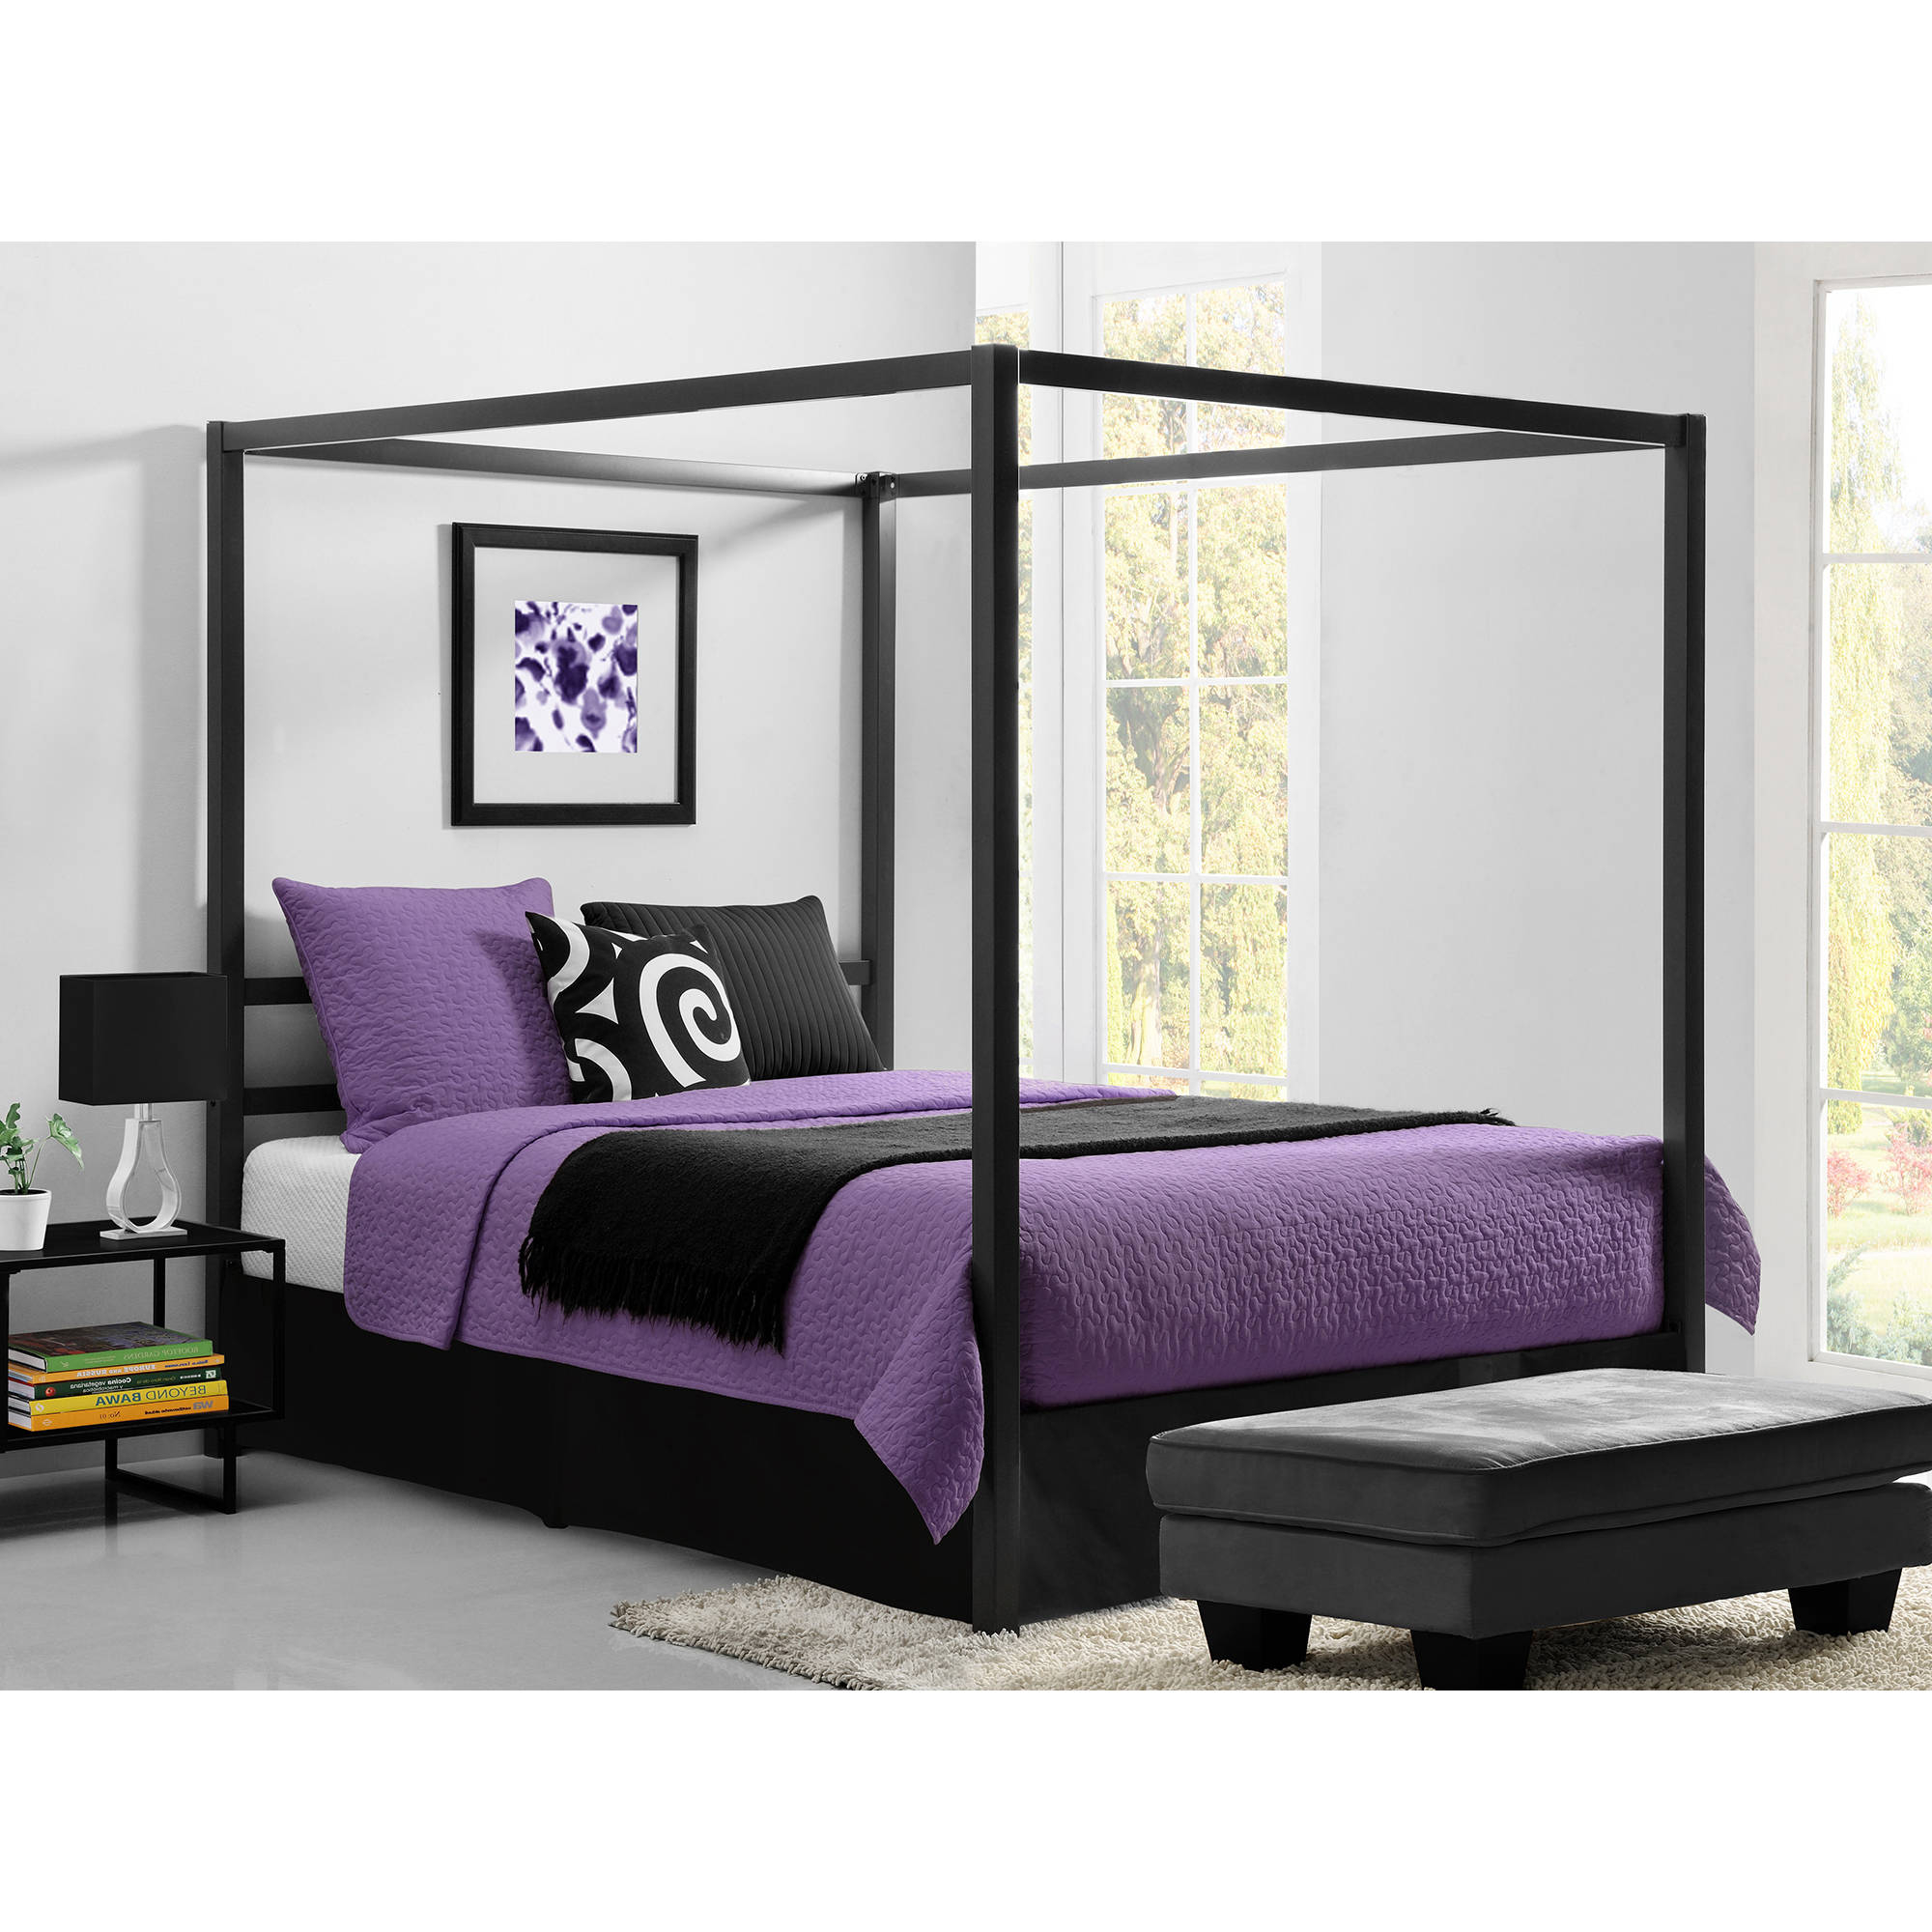 Stainless steel bedroom furniture